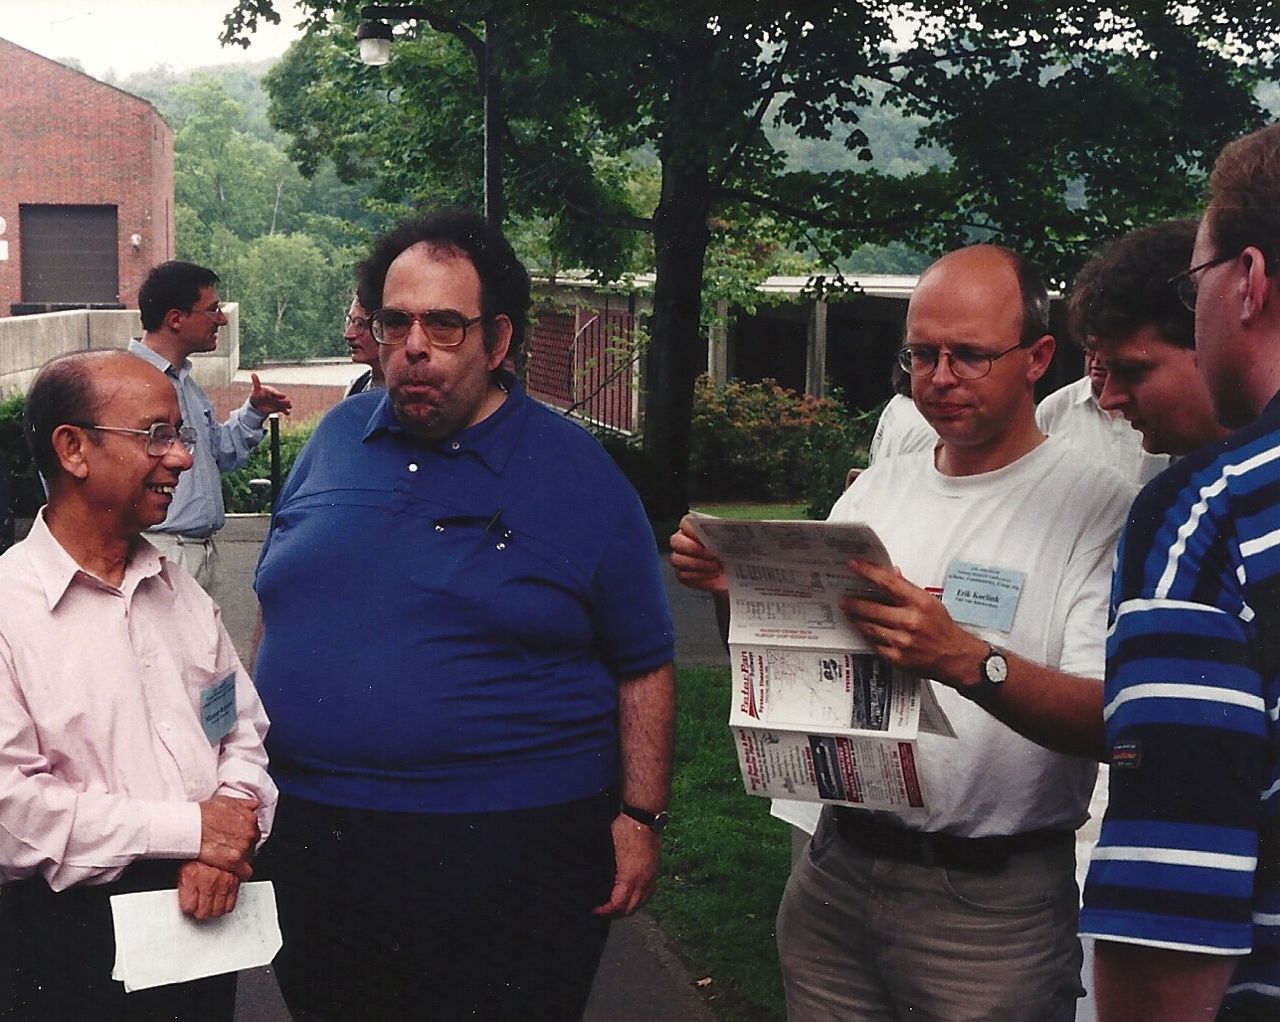 Rahman, Ismail, Koelink, Swarttouw and  Koekoek
at Mt Holyoke College, 1998